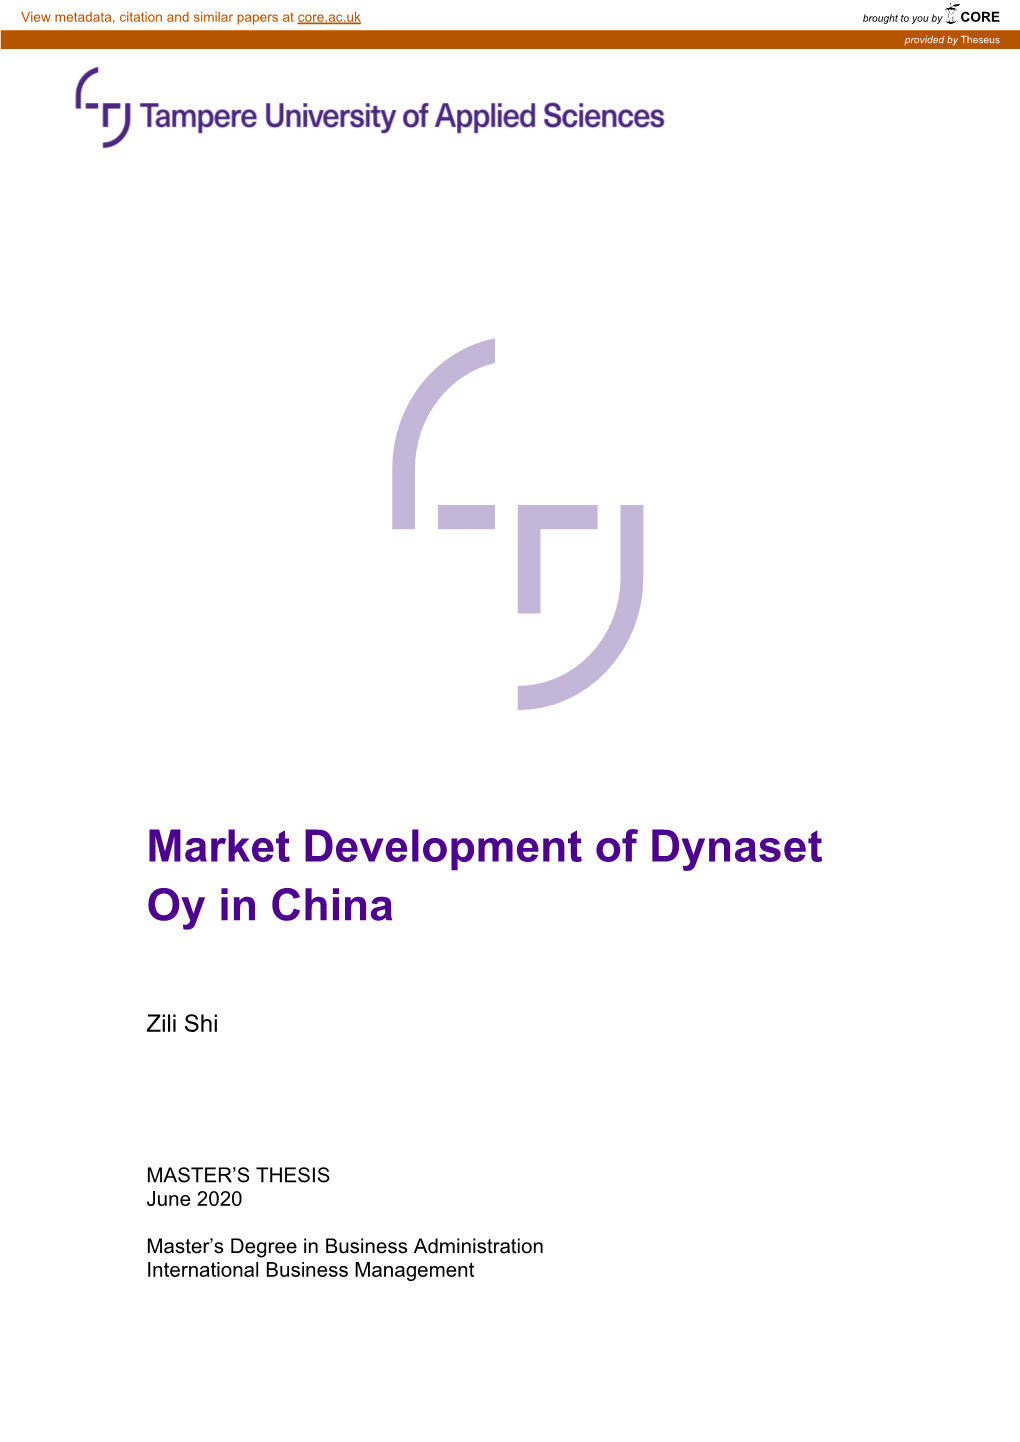 Market Development of Dynaset Oy in China